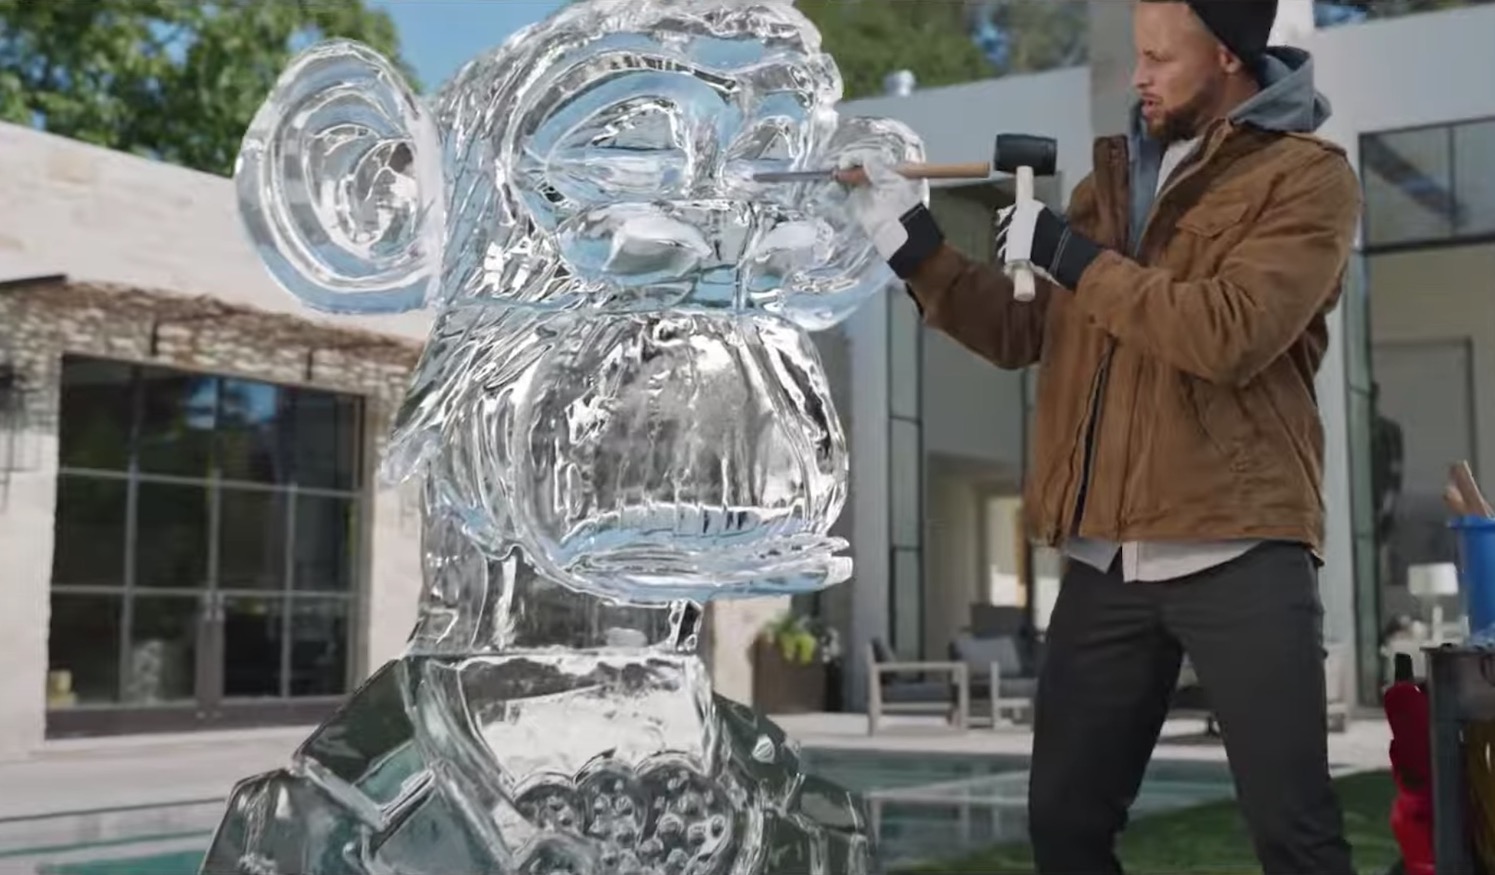 Steph Curry carves a Bored Ape ice sculpture.